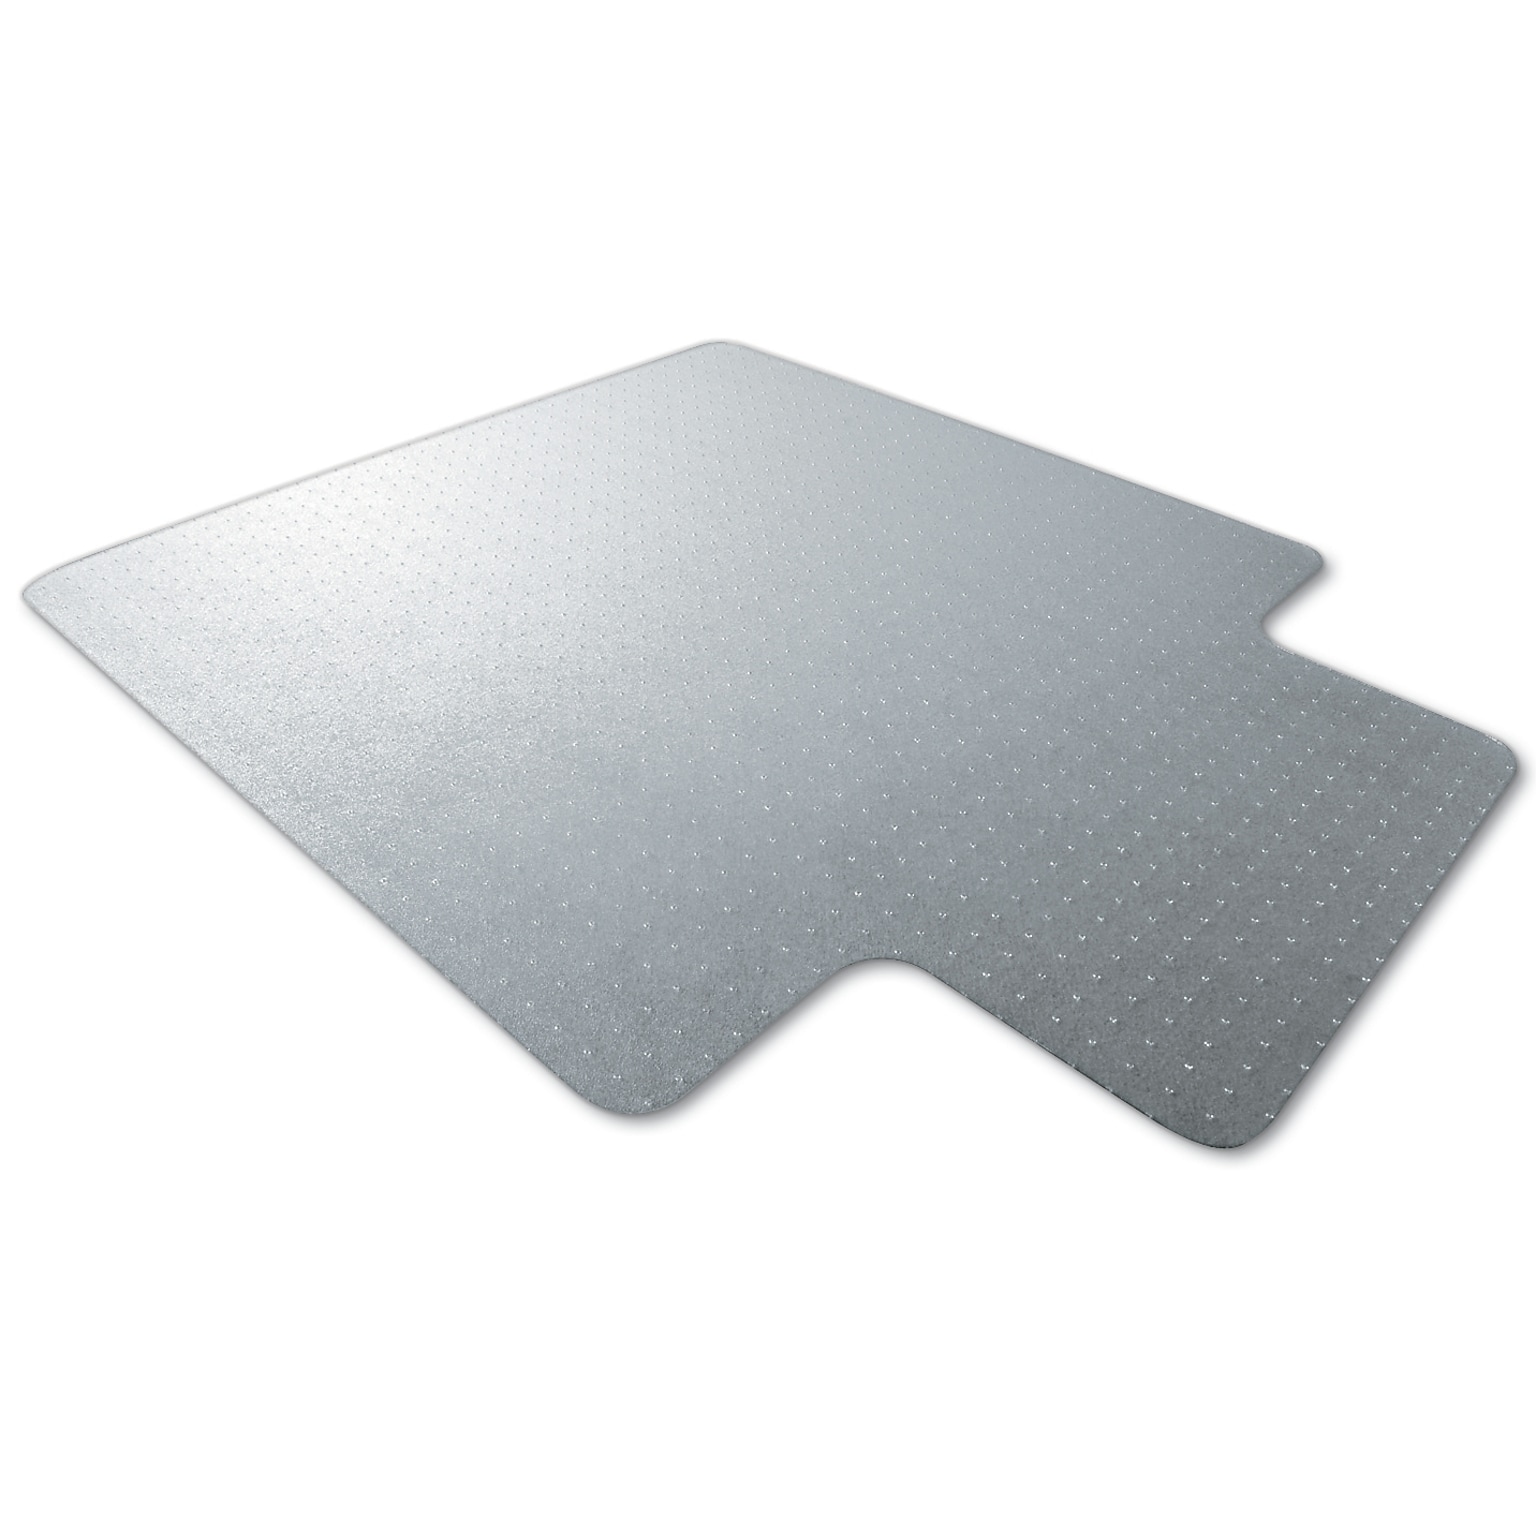 Floortex Ultimat Carpet Chair Mat, 48 x 48, Designed for Low/Medium-Pile Carpet, Clear Polycarbonate (FR1112123ER)